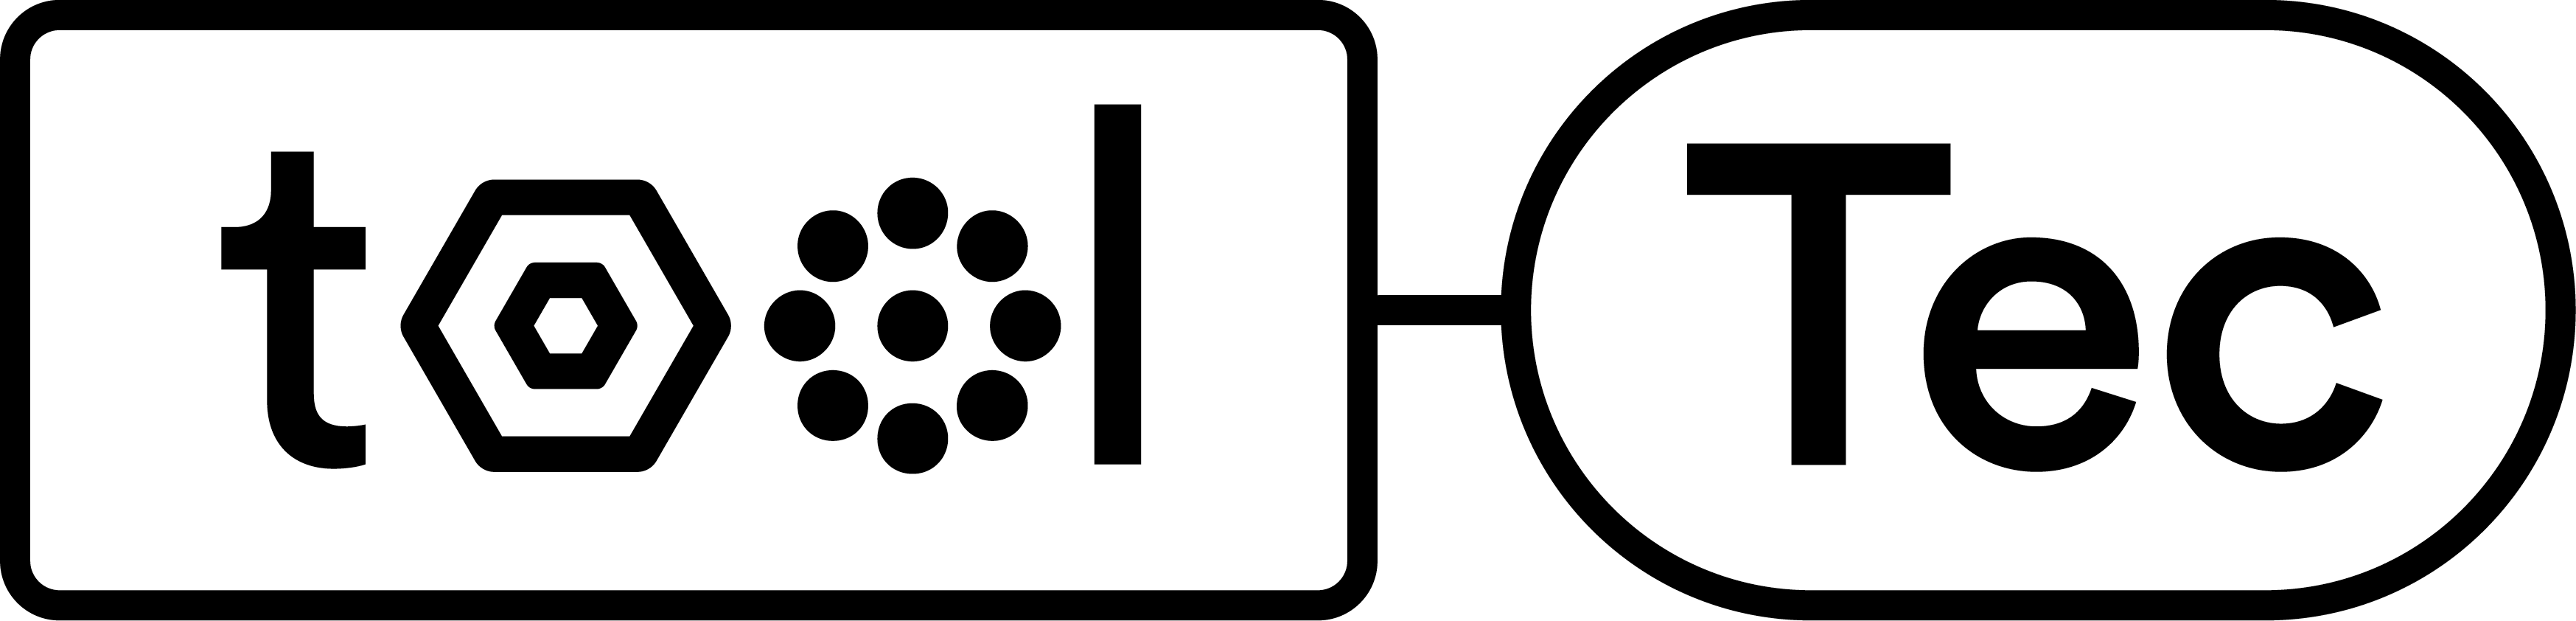 tool-tec-logo